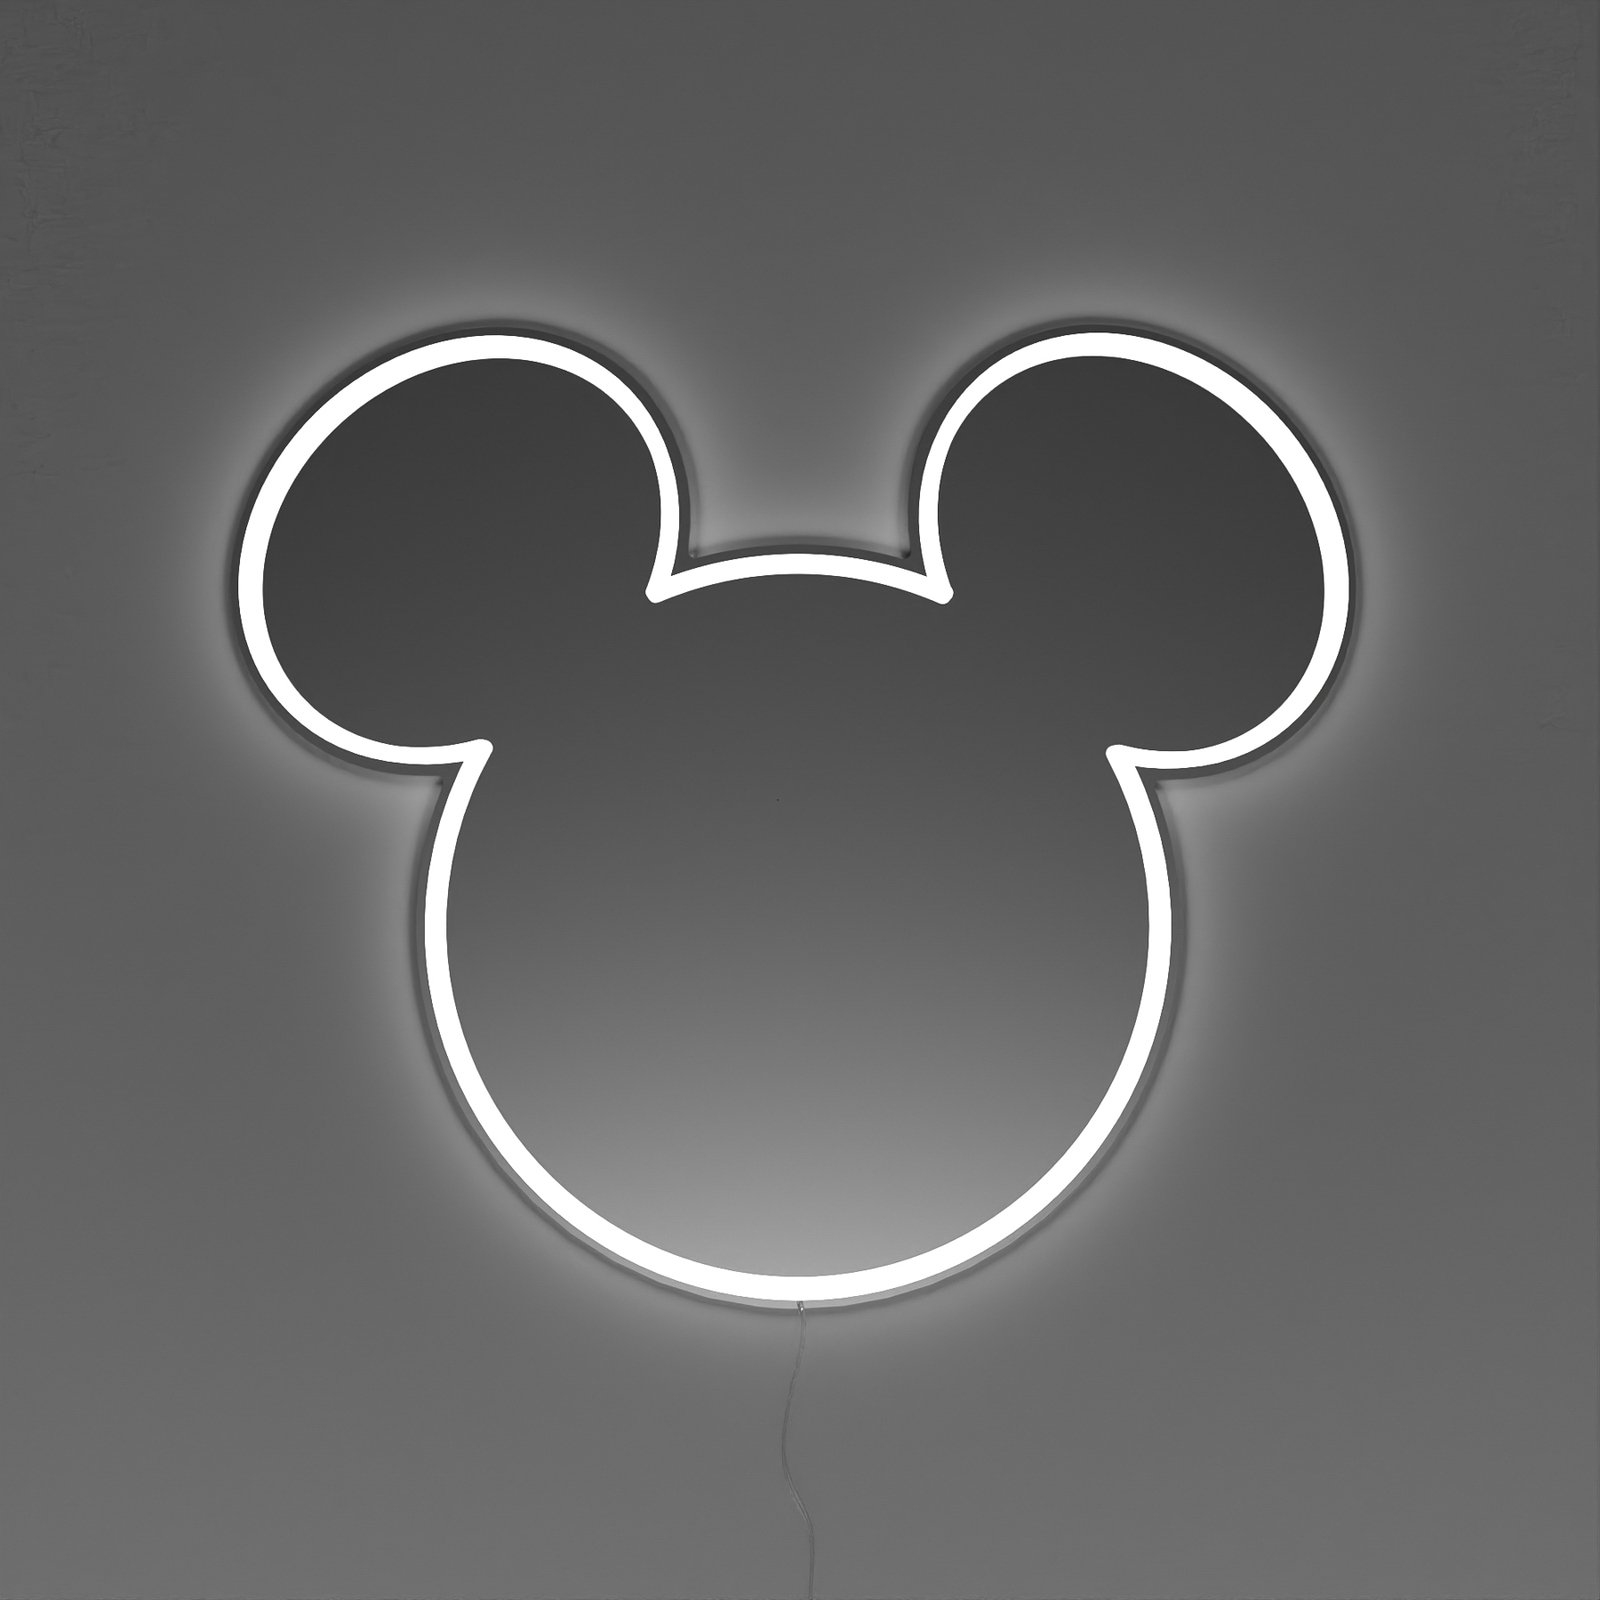 YellowPop Disney Mickey Wandspiegel, silber